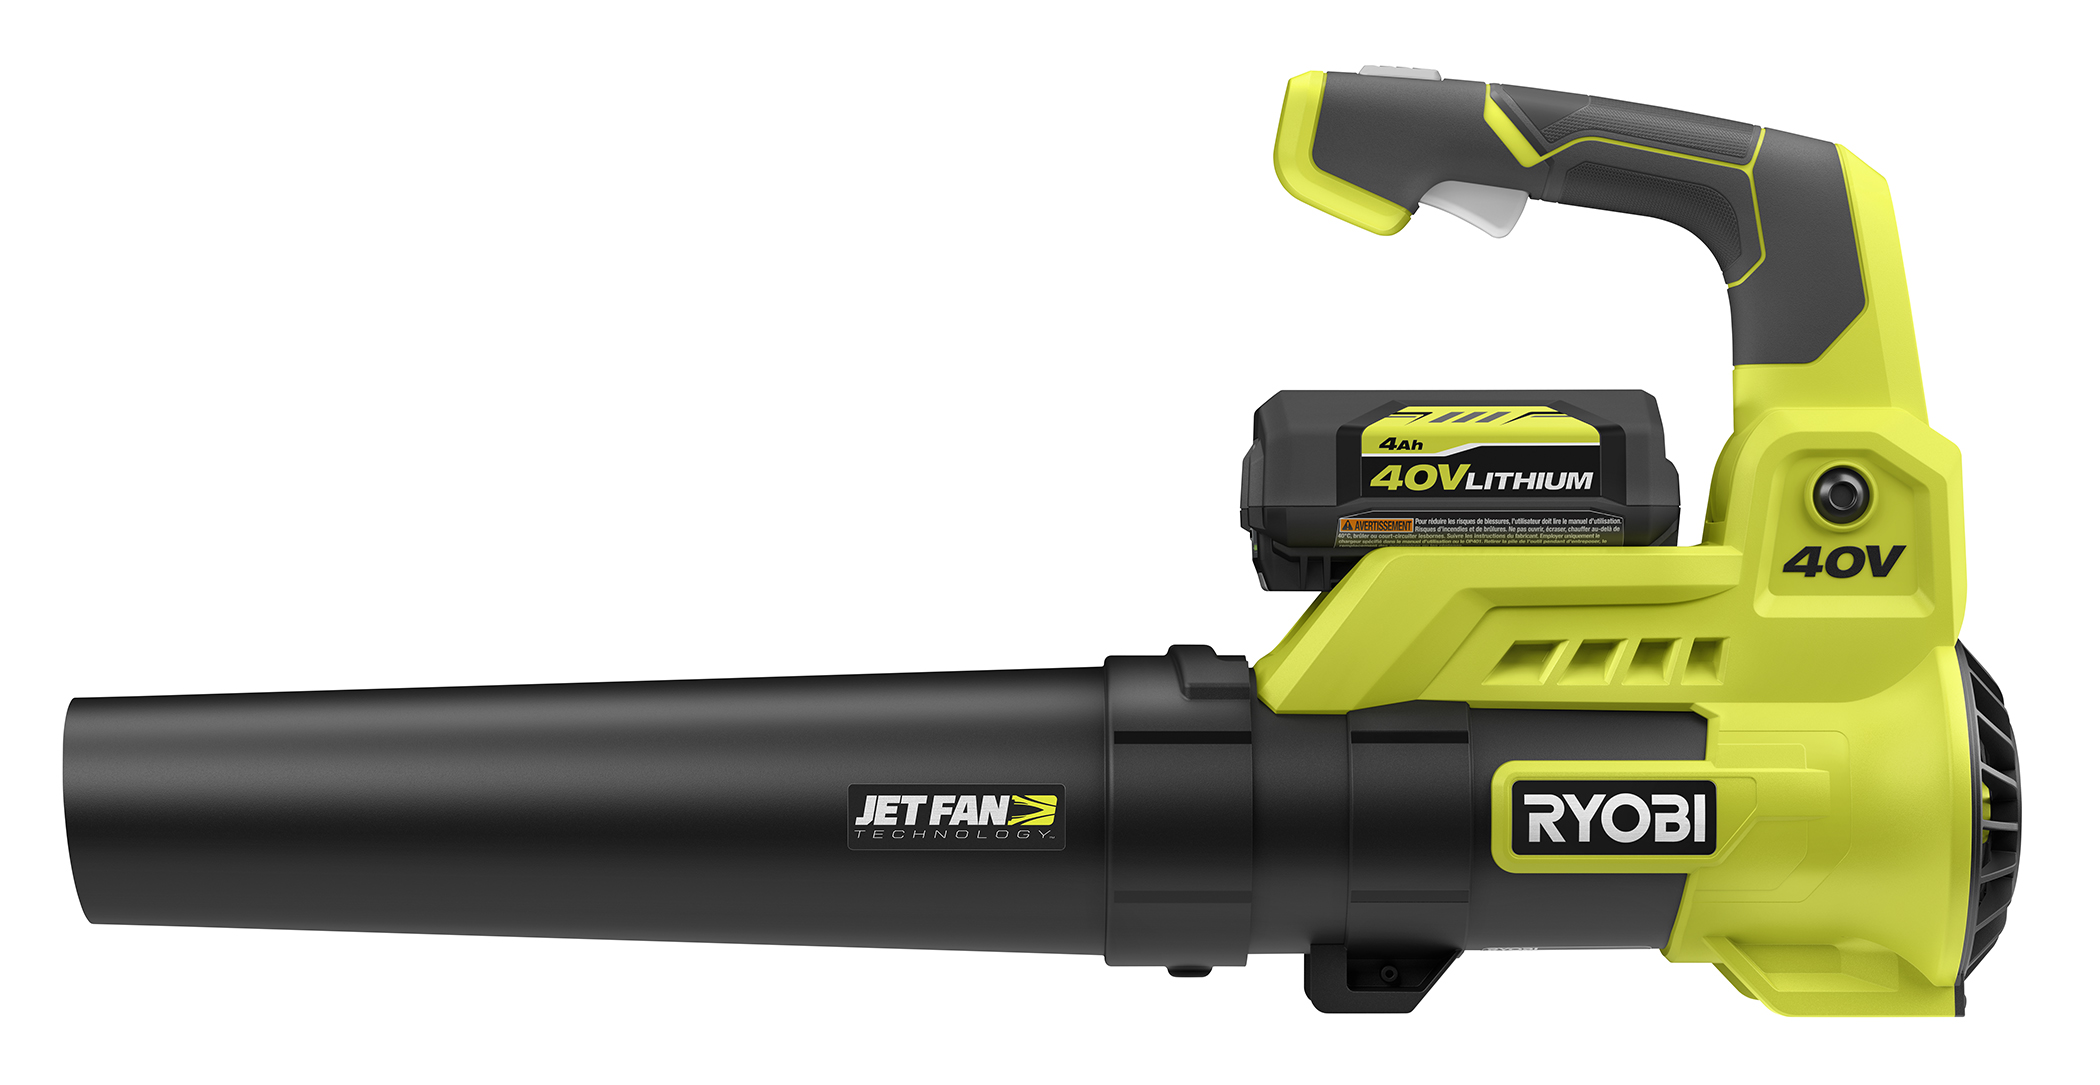 RYOBI 40V Cordless Battery String Trimmer and Jet Fan Blower Combo